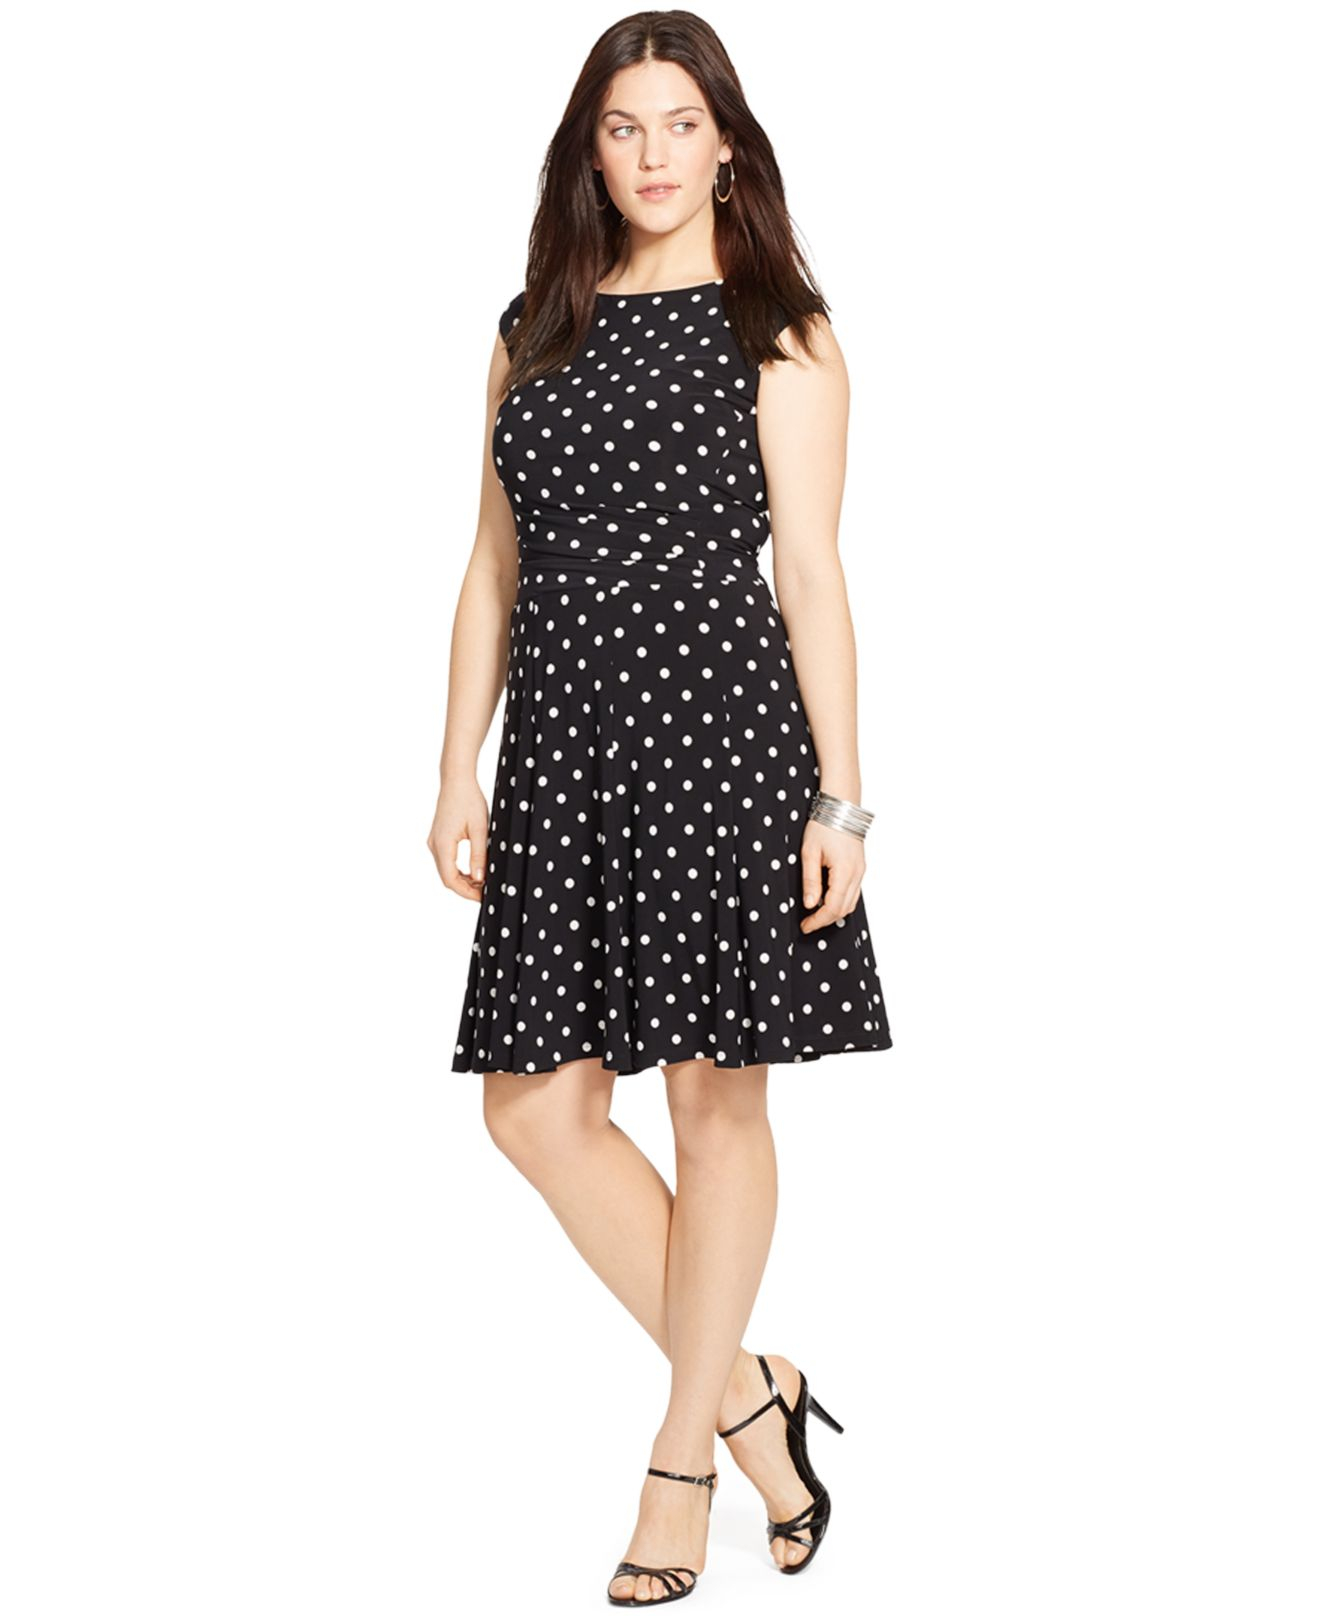 Lyst - Lauren By Ralph Lauren Plus Size Sleeveless Polka-Dot Dress in Black